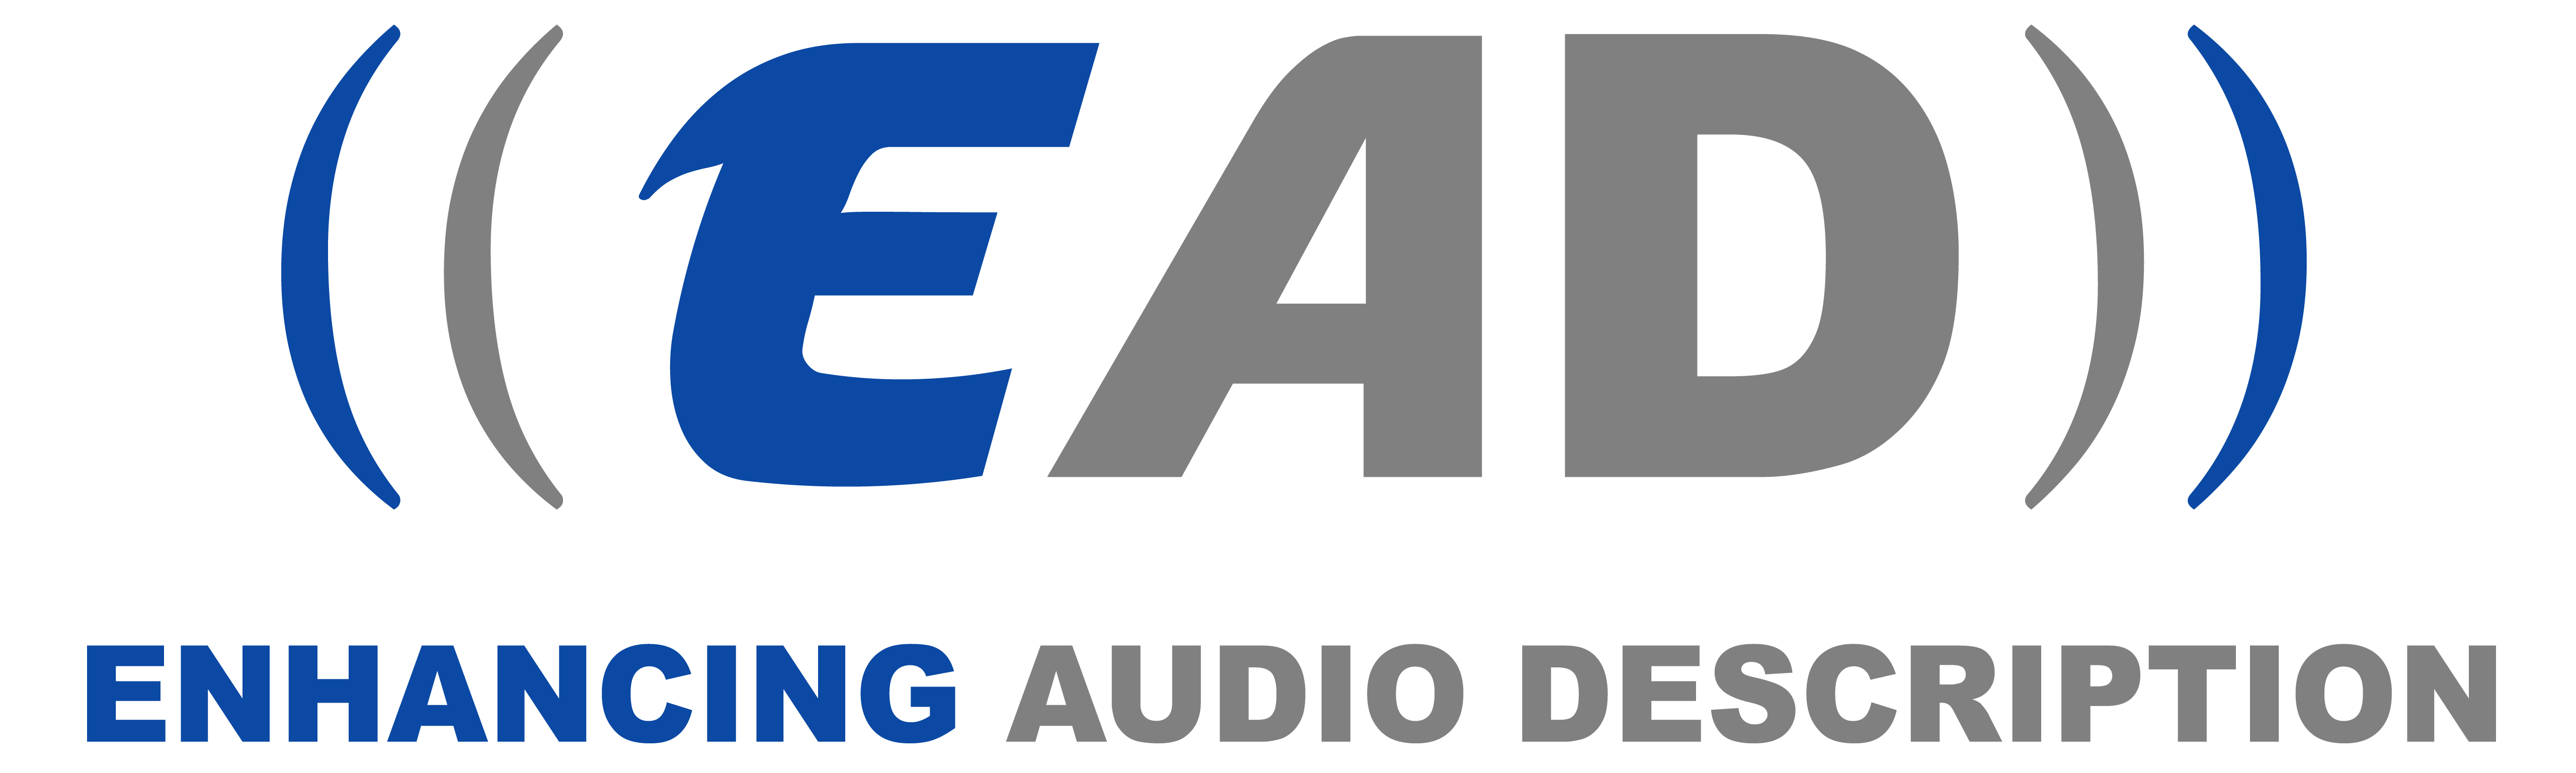 Enhancing Audio Description